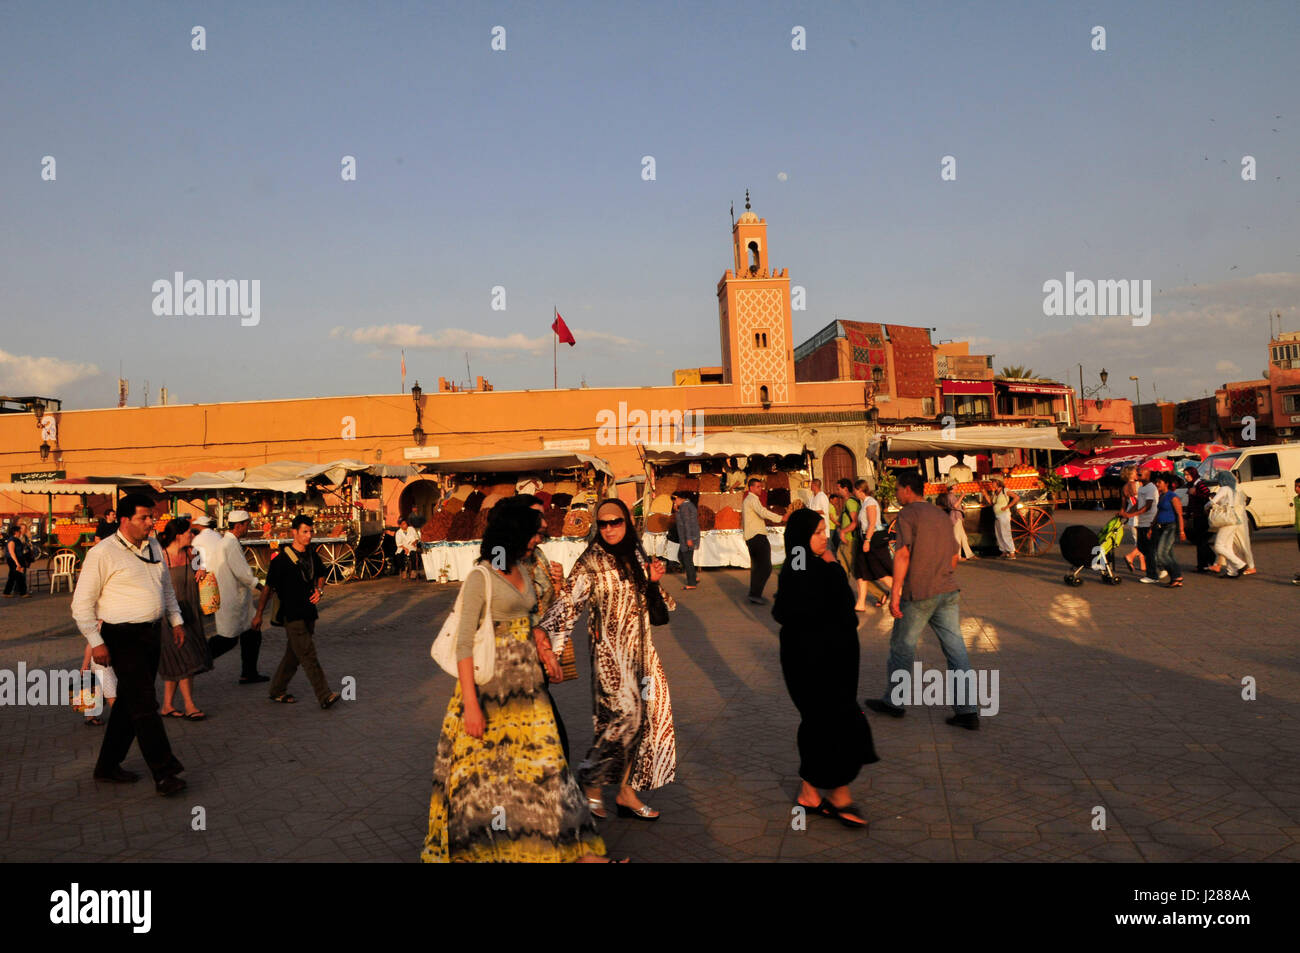 The super colorful Djema el Fna sq. in Marrakesh. Stock Photo